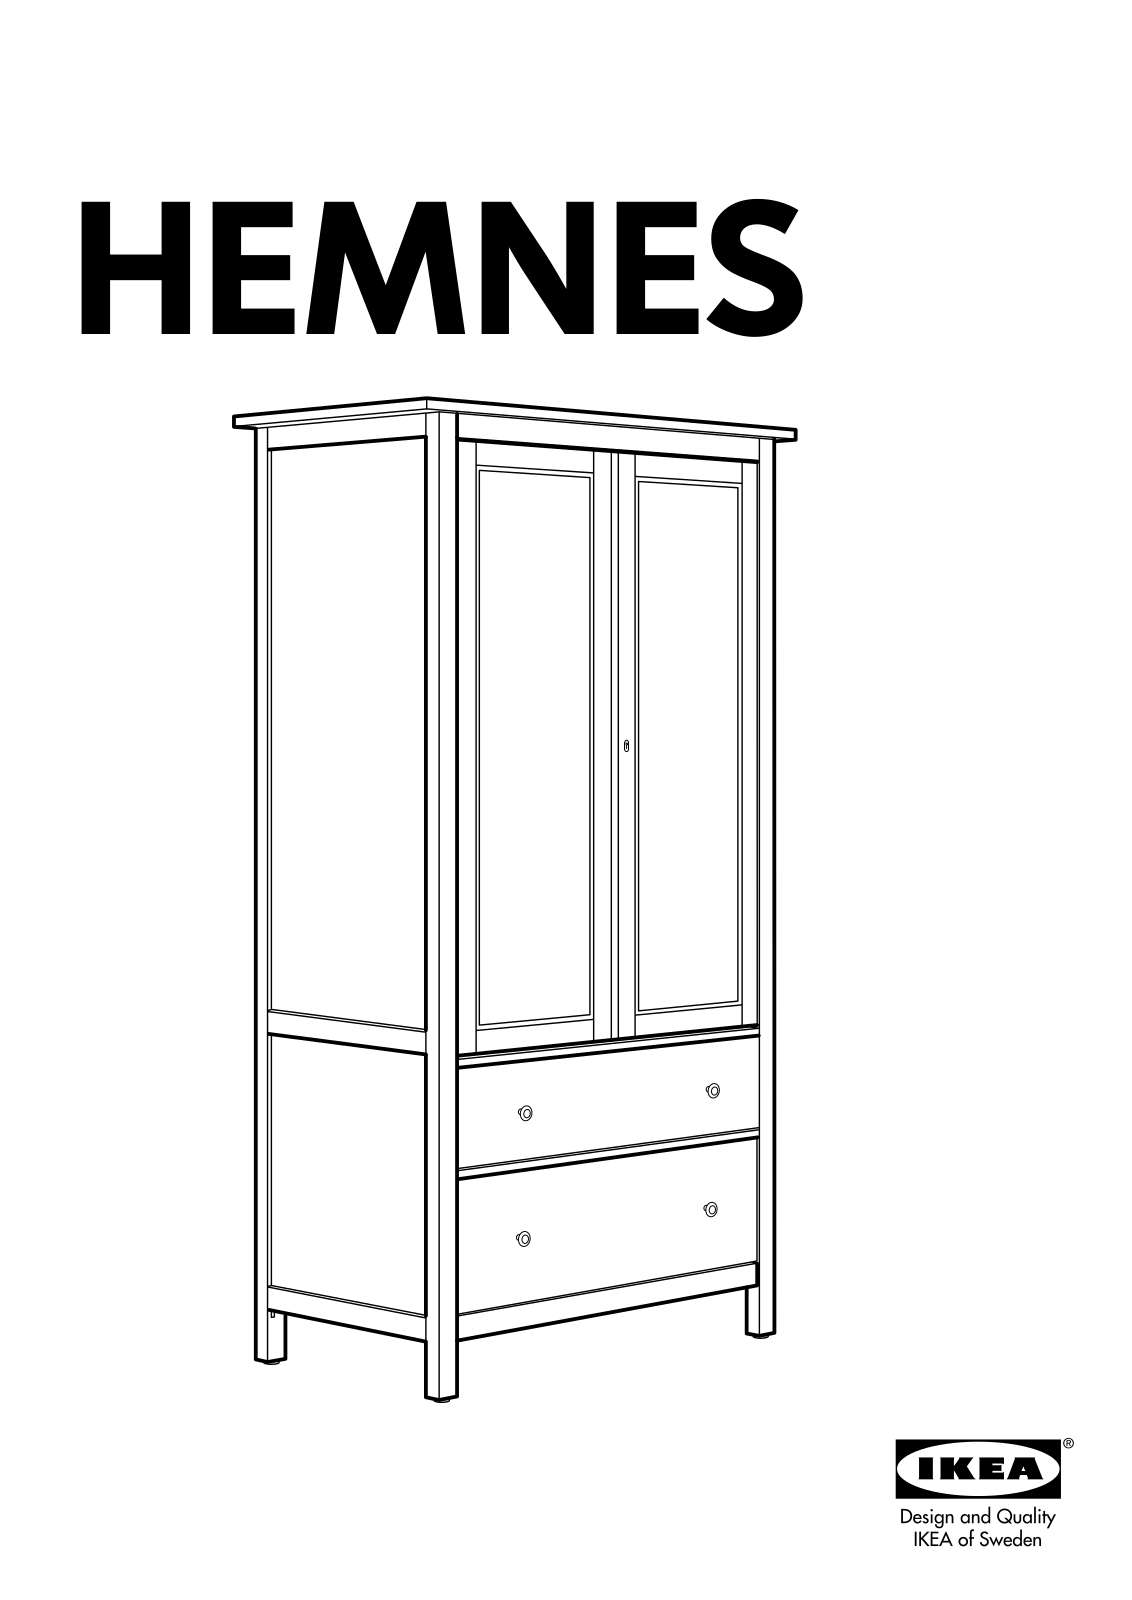 IKEA HEMNES WARDROBE W- 2 DRAWERS Assembly Instruction